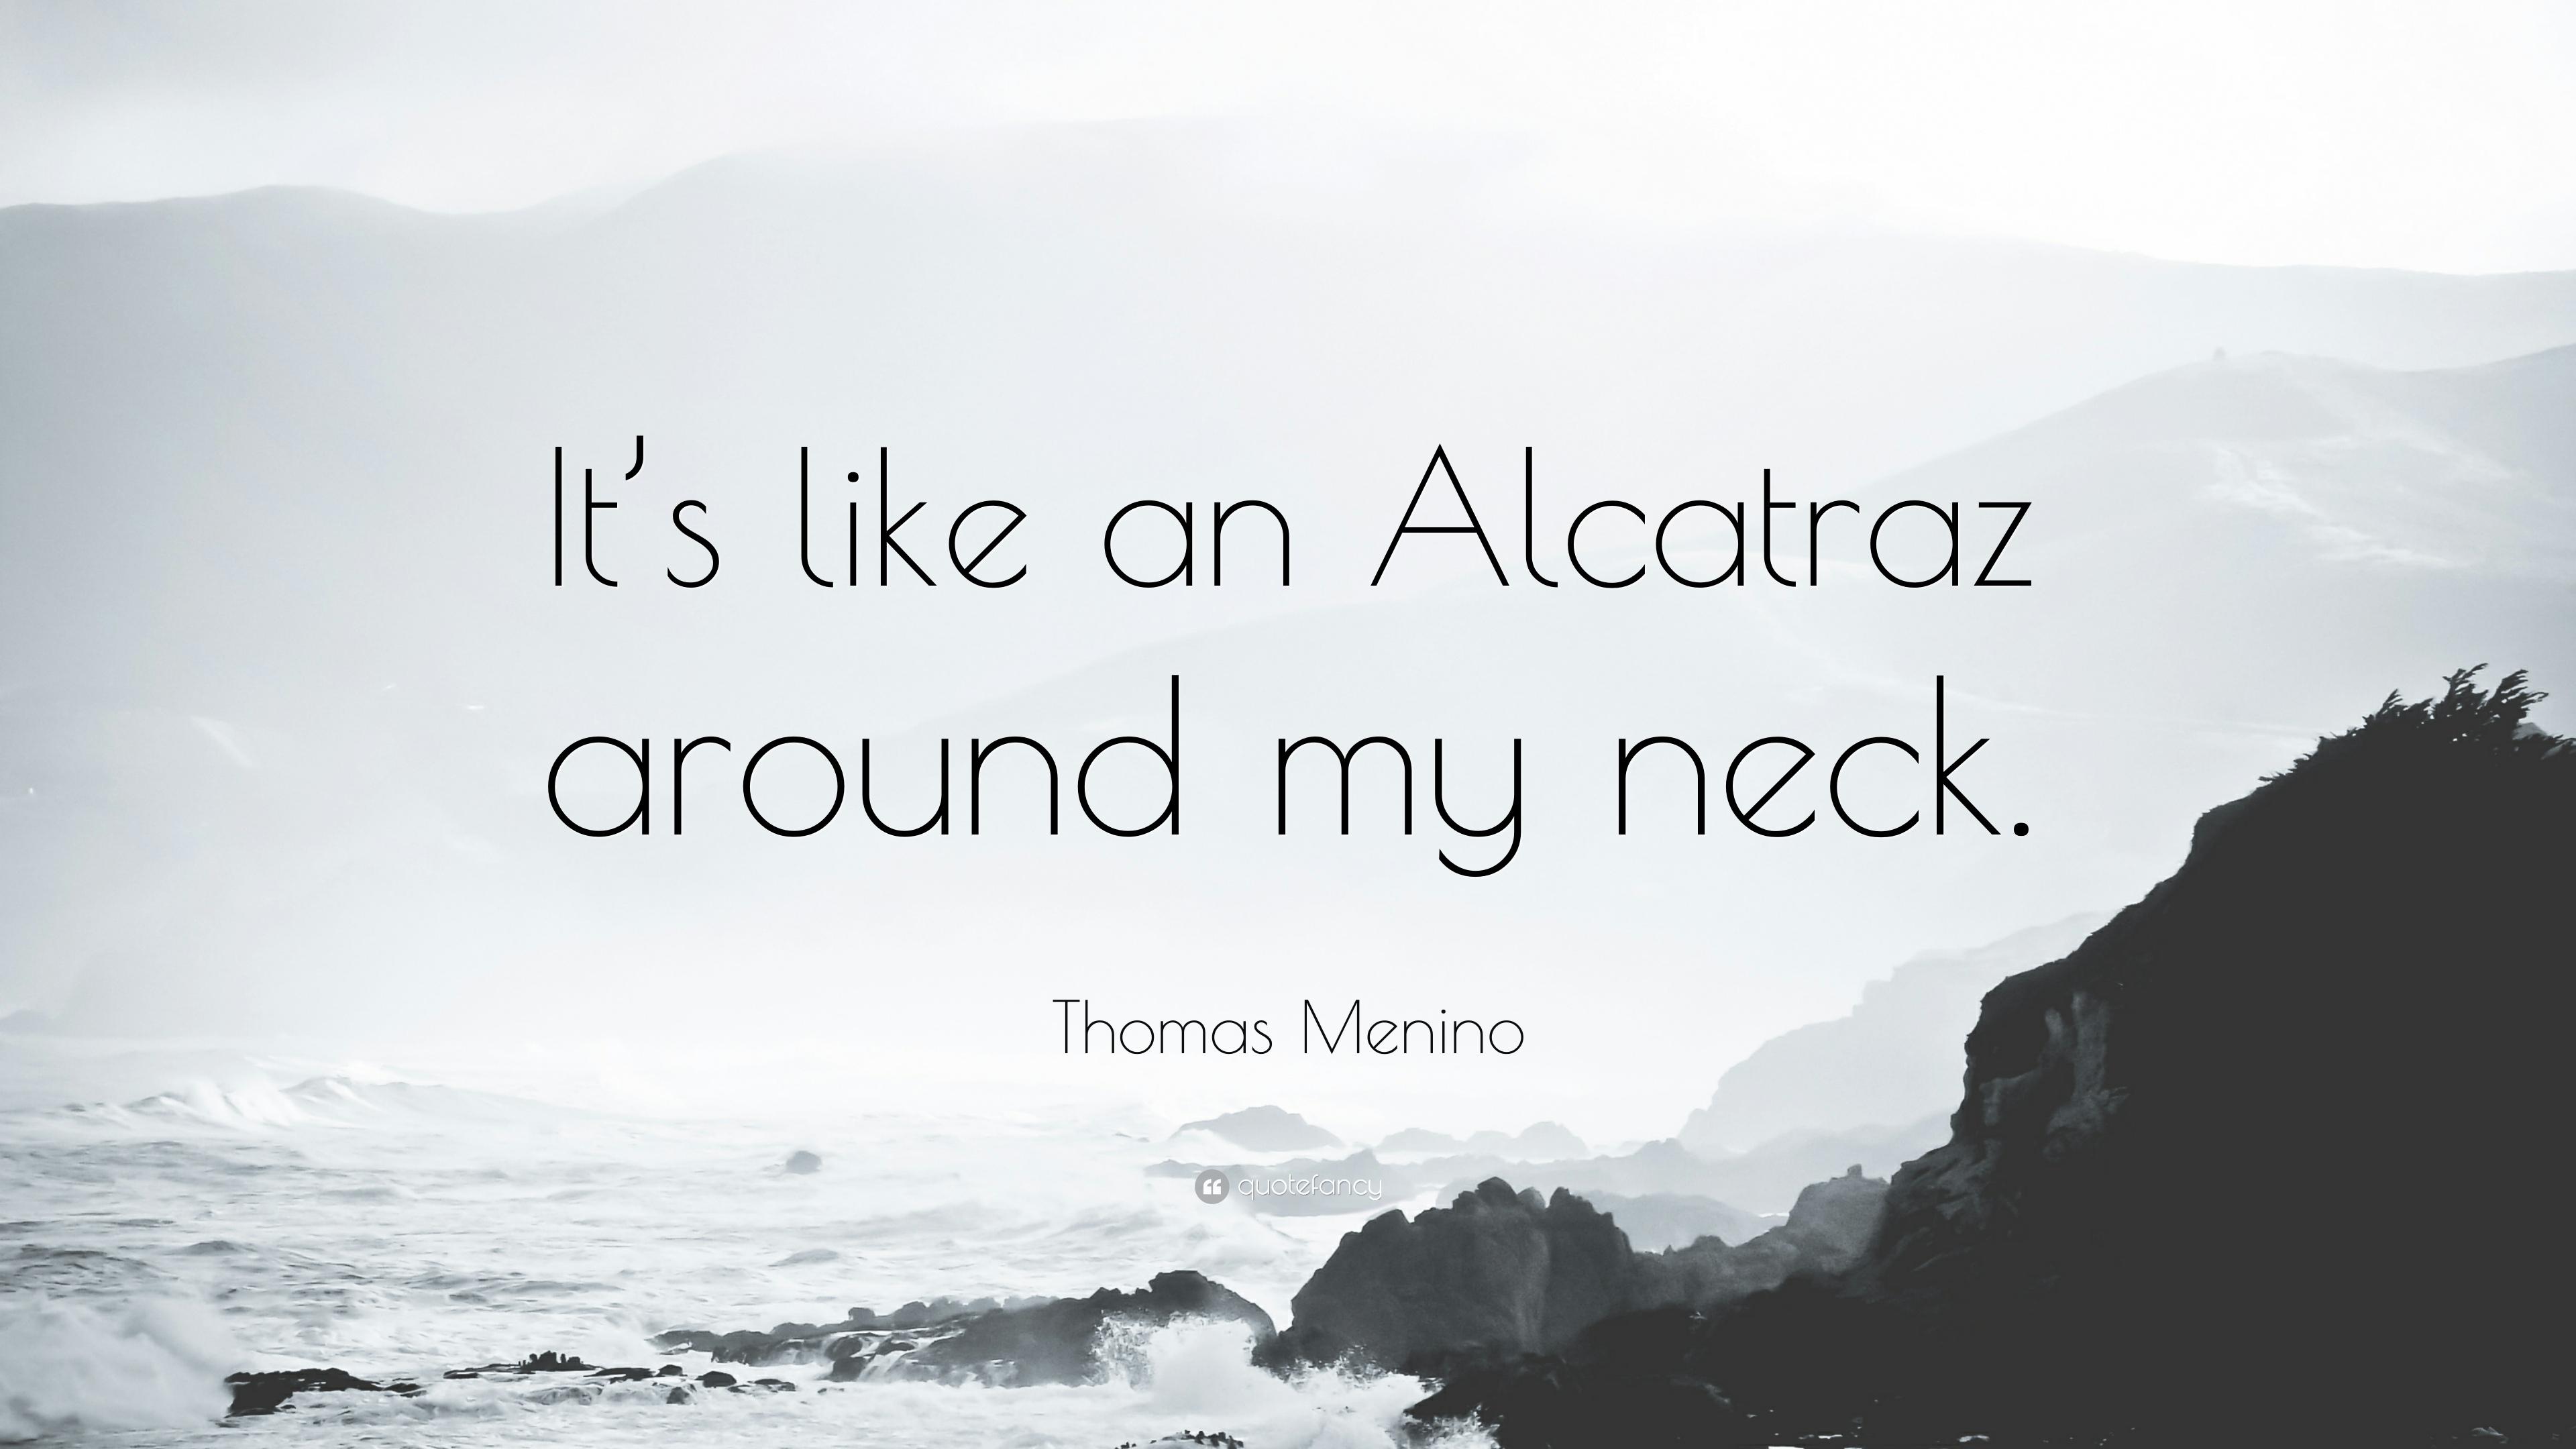 Thomas Menino Quote: “It's like an Alcatraz around my neck.” 7